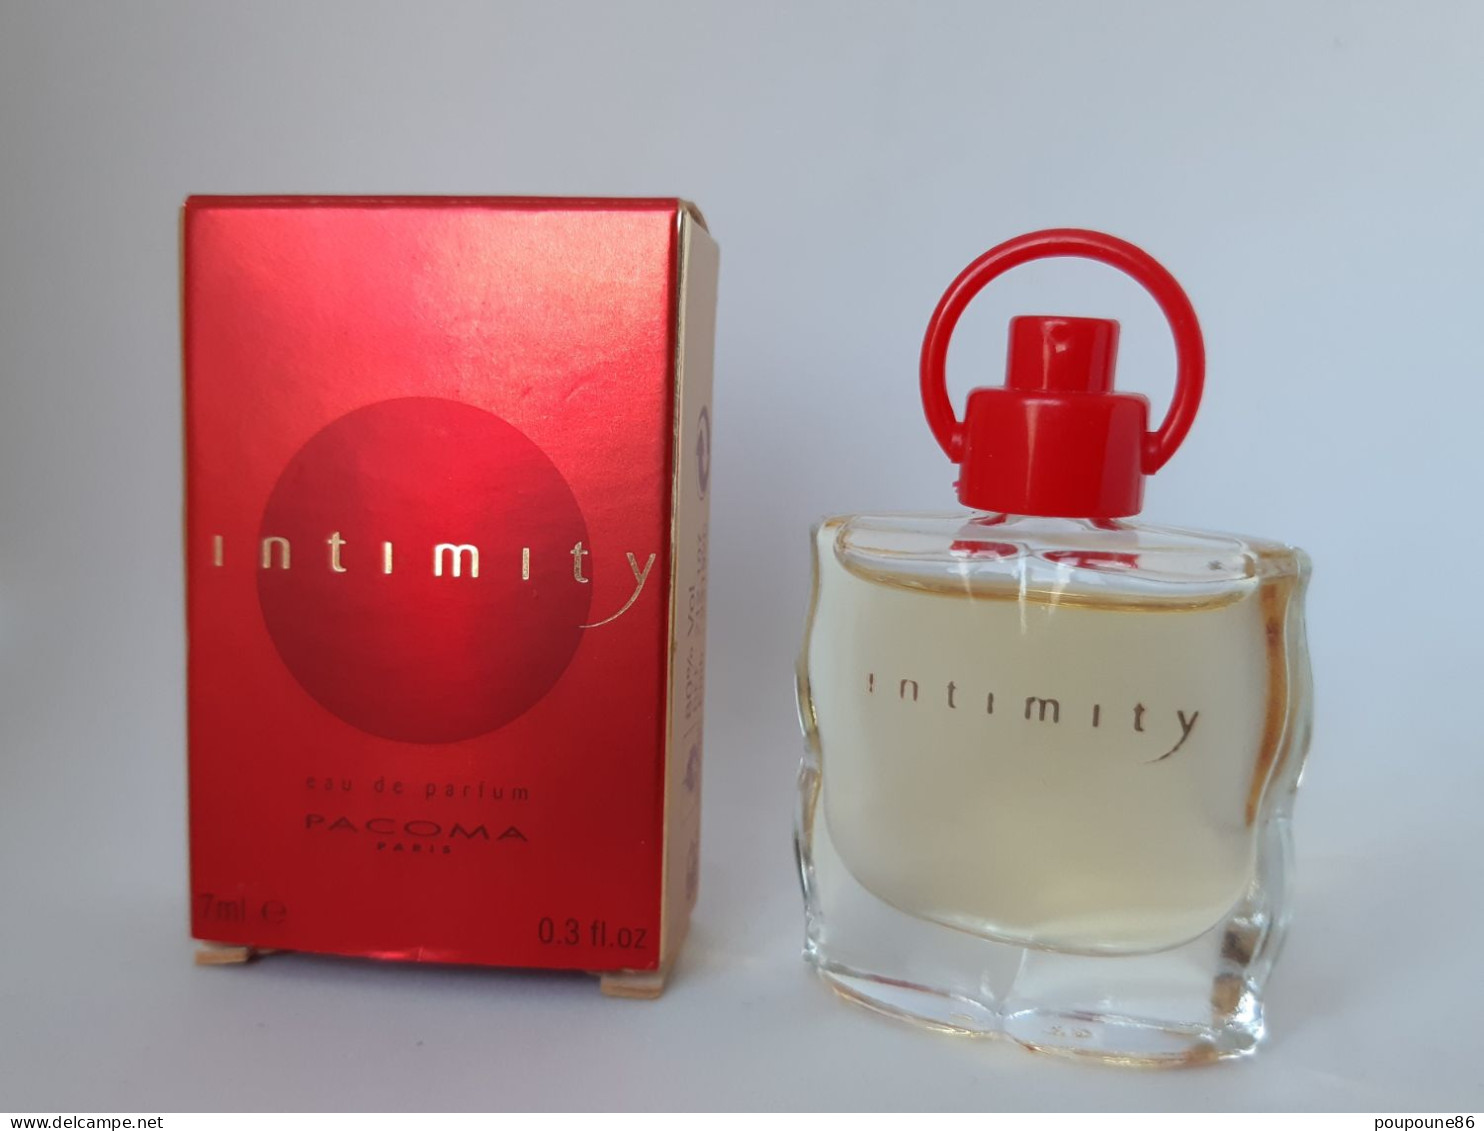 MINIATURE EAU PARFUM INTIMITY DE PACOMA - 7 Ml   AVEC SA BOITE - Miniatures Womens' Fragrances (in Box)